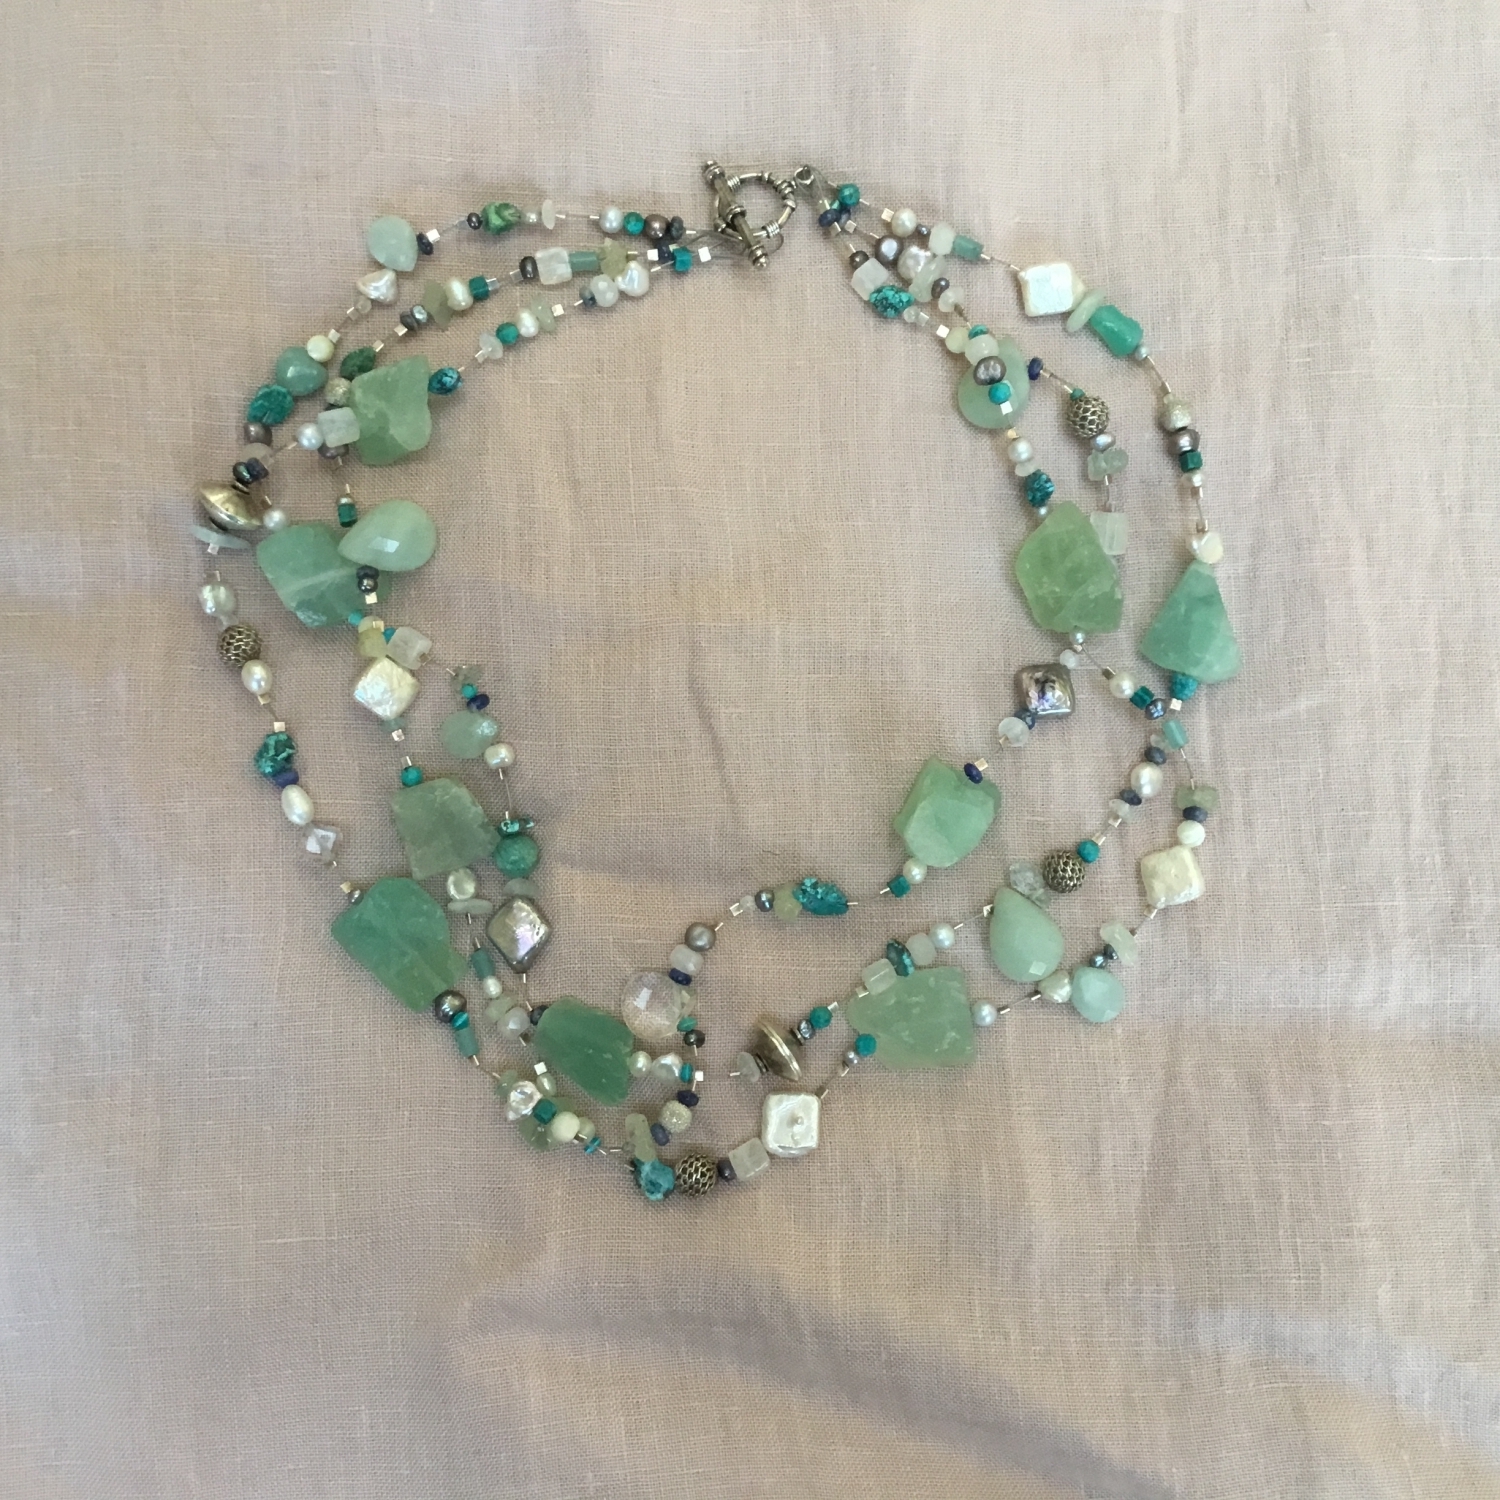 Aqua and silver necklace